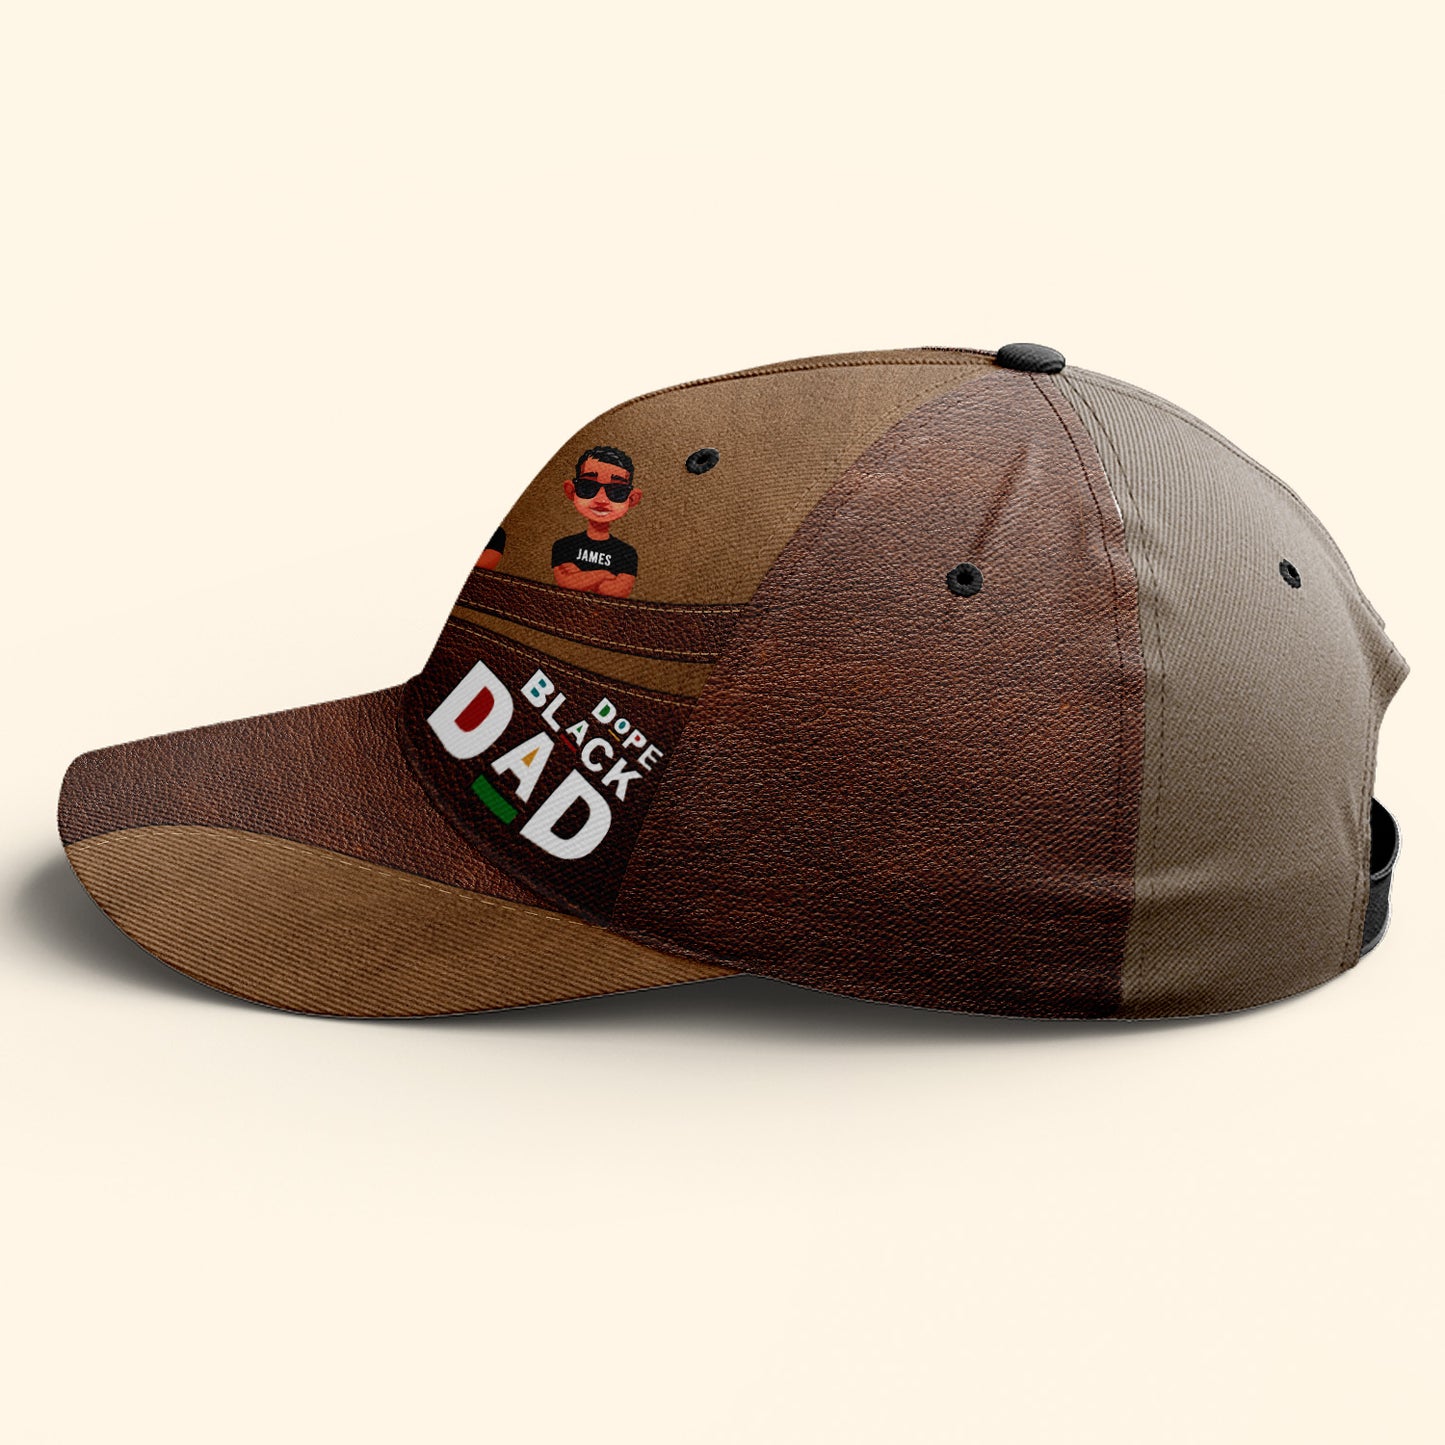 Dope Black Dad - Personalized Classic Cap